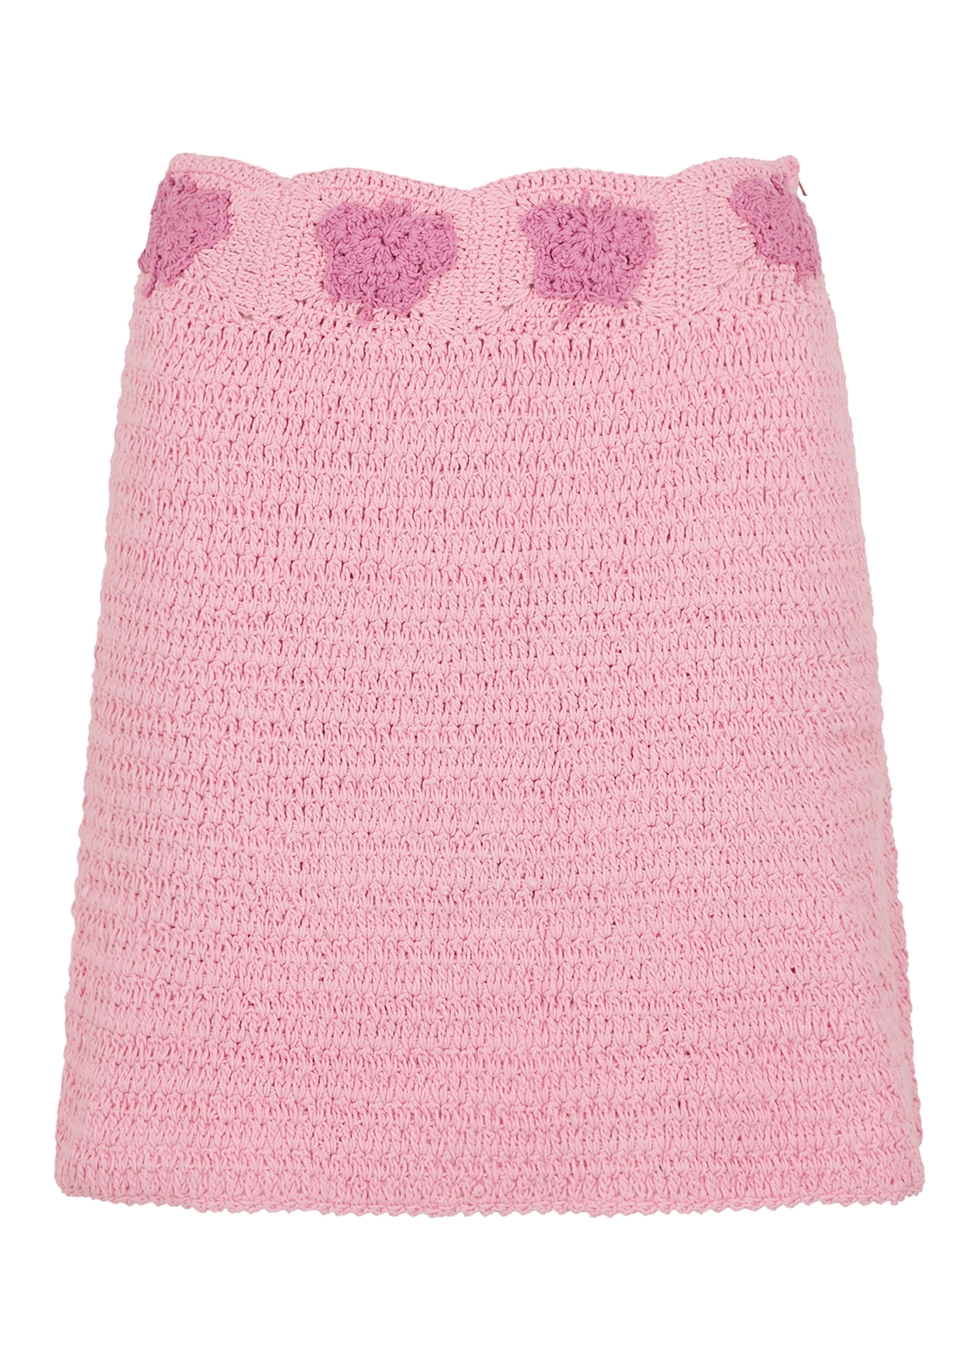 Butterfly pink crochet mini skirt Harvey Nichols Women Clothing Skirts Mini Skirts 